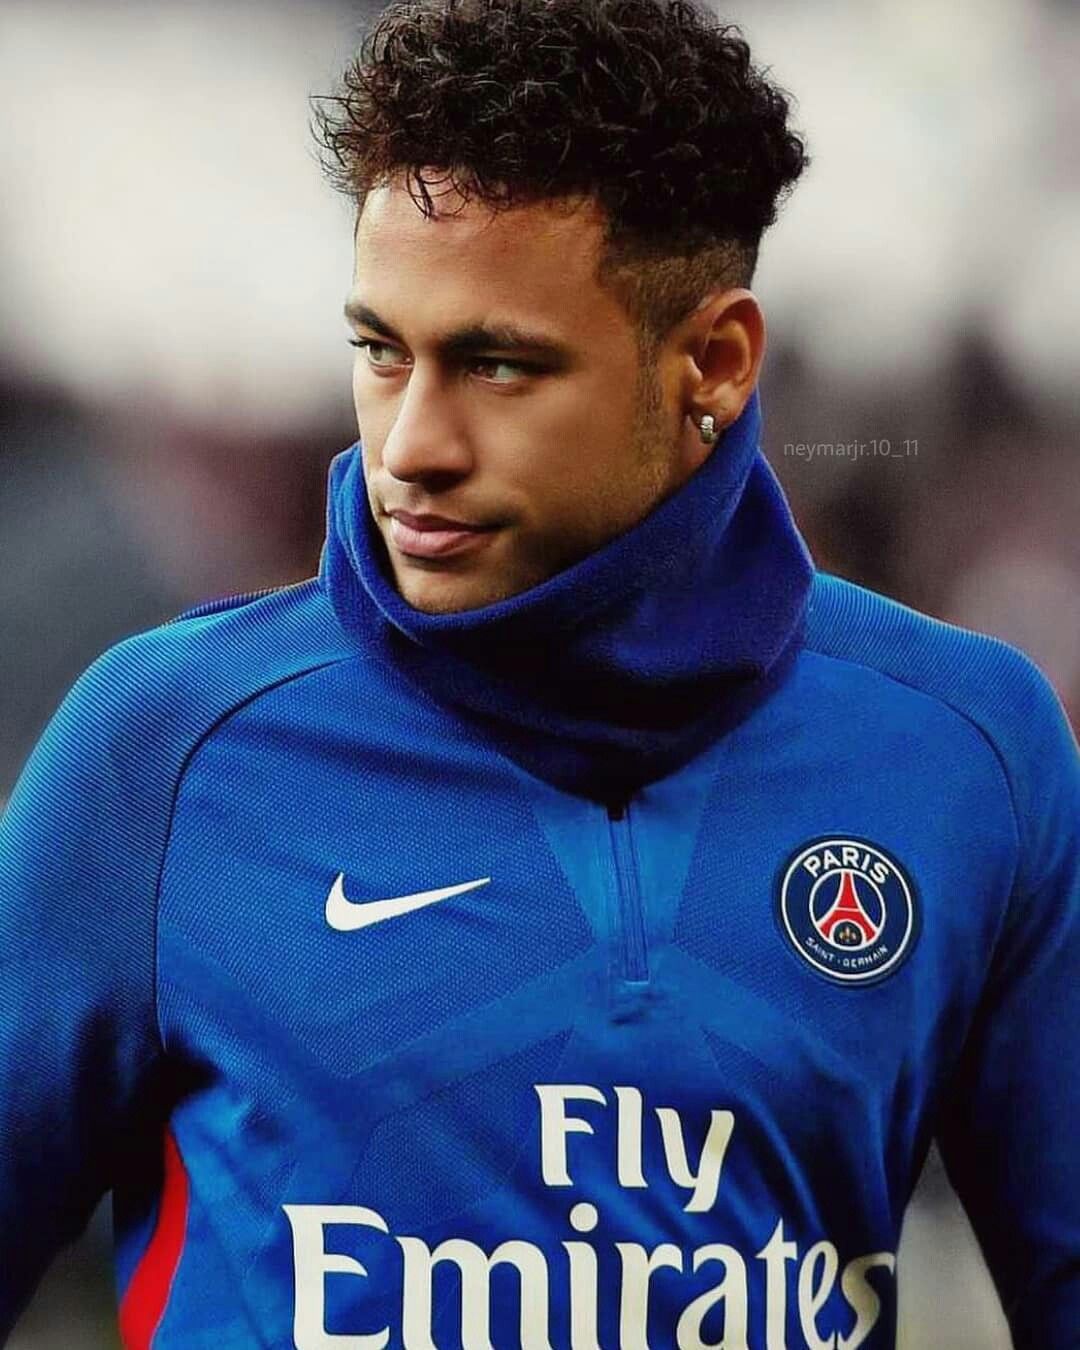 Neymar dp profile pics for whatsapp, facebook - NEYMAR JR